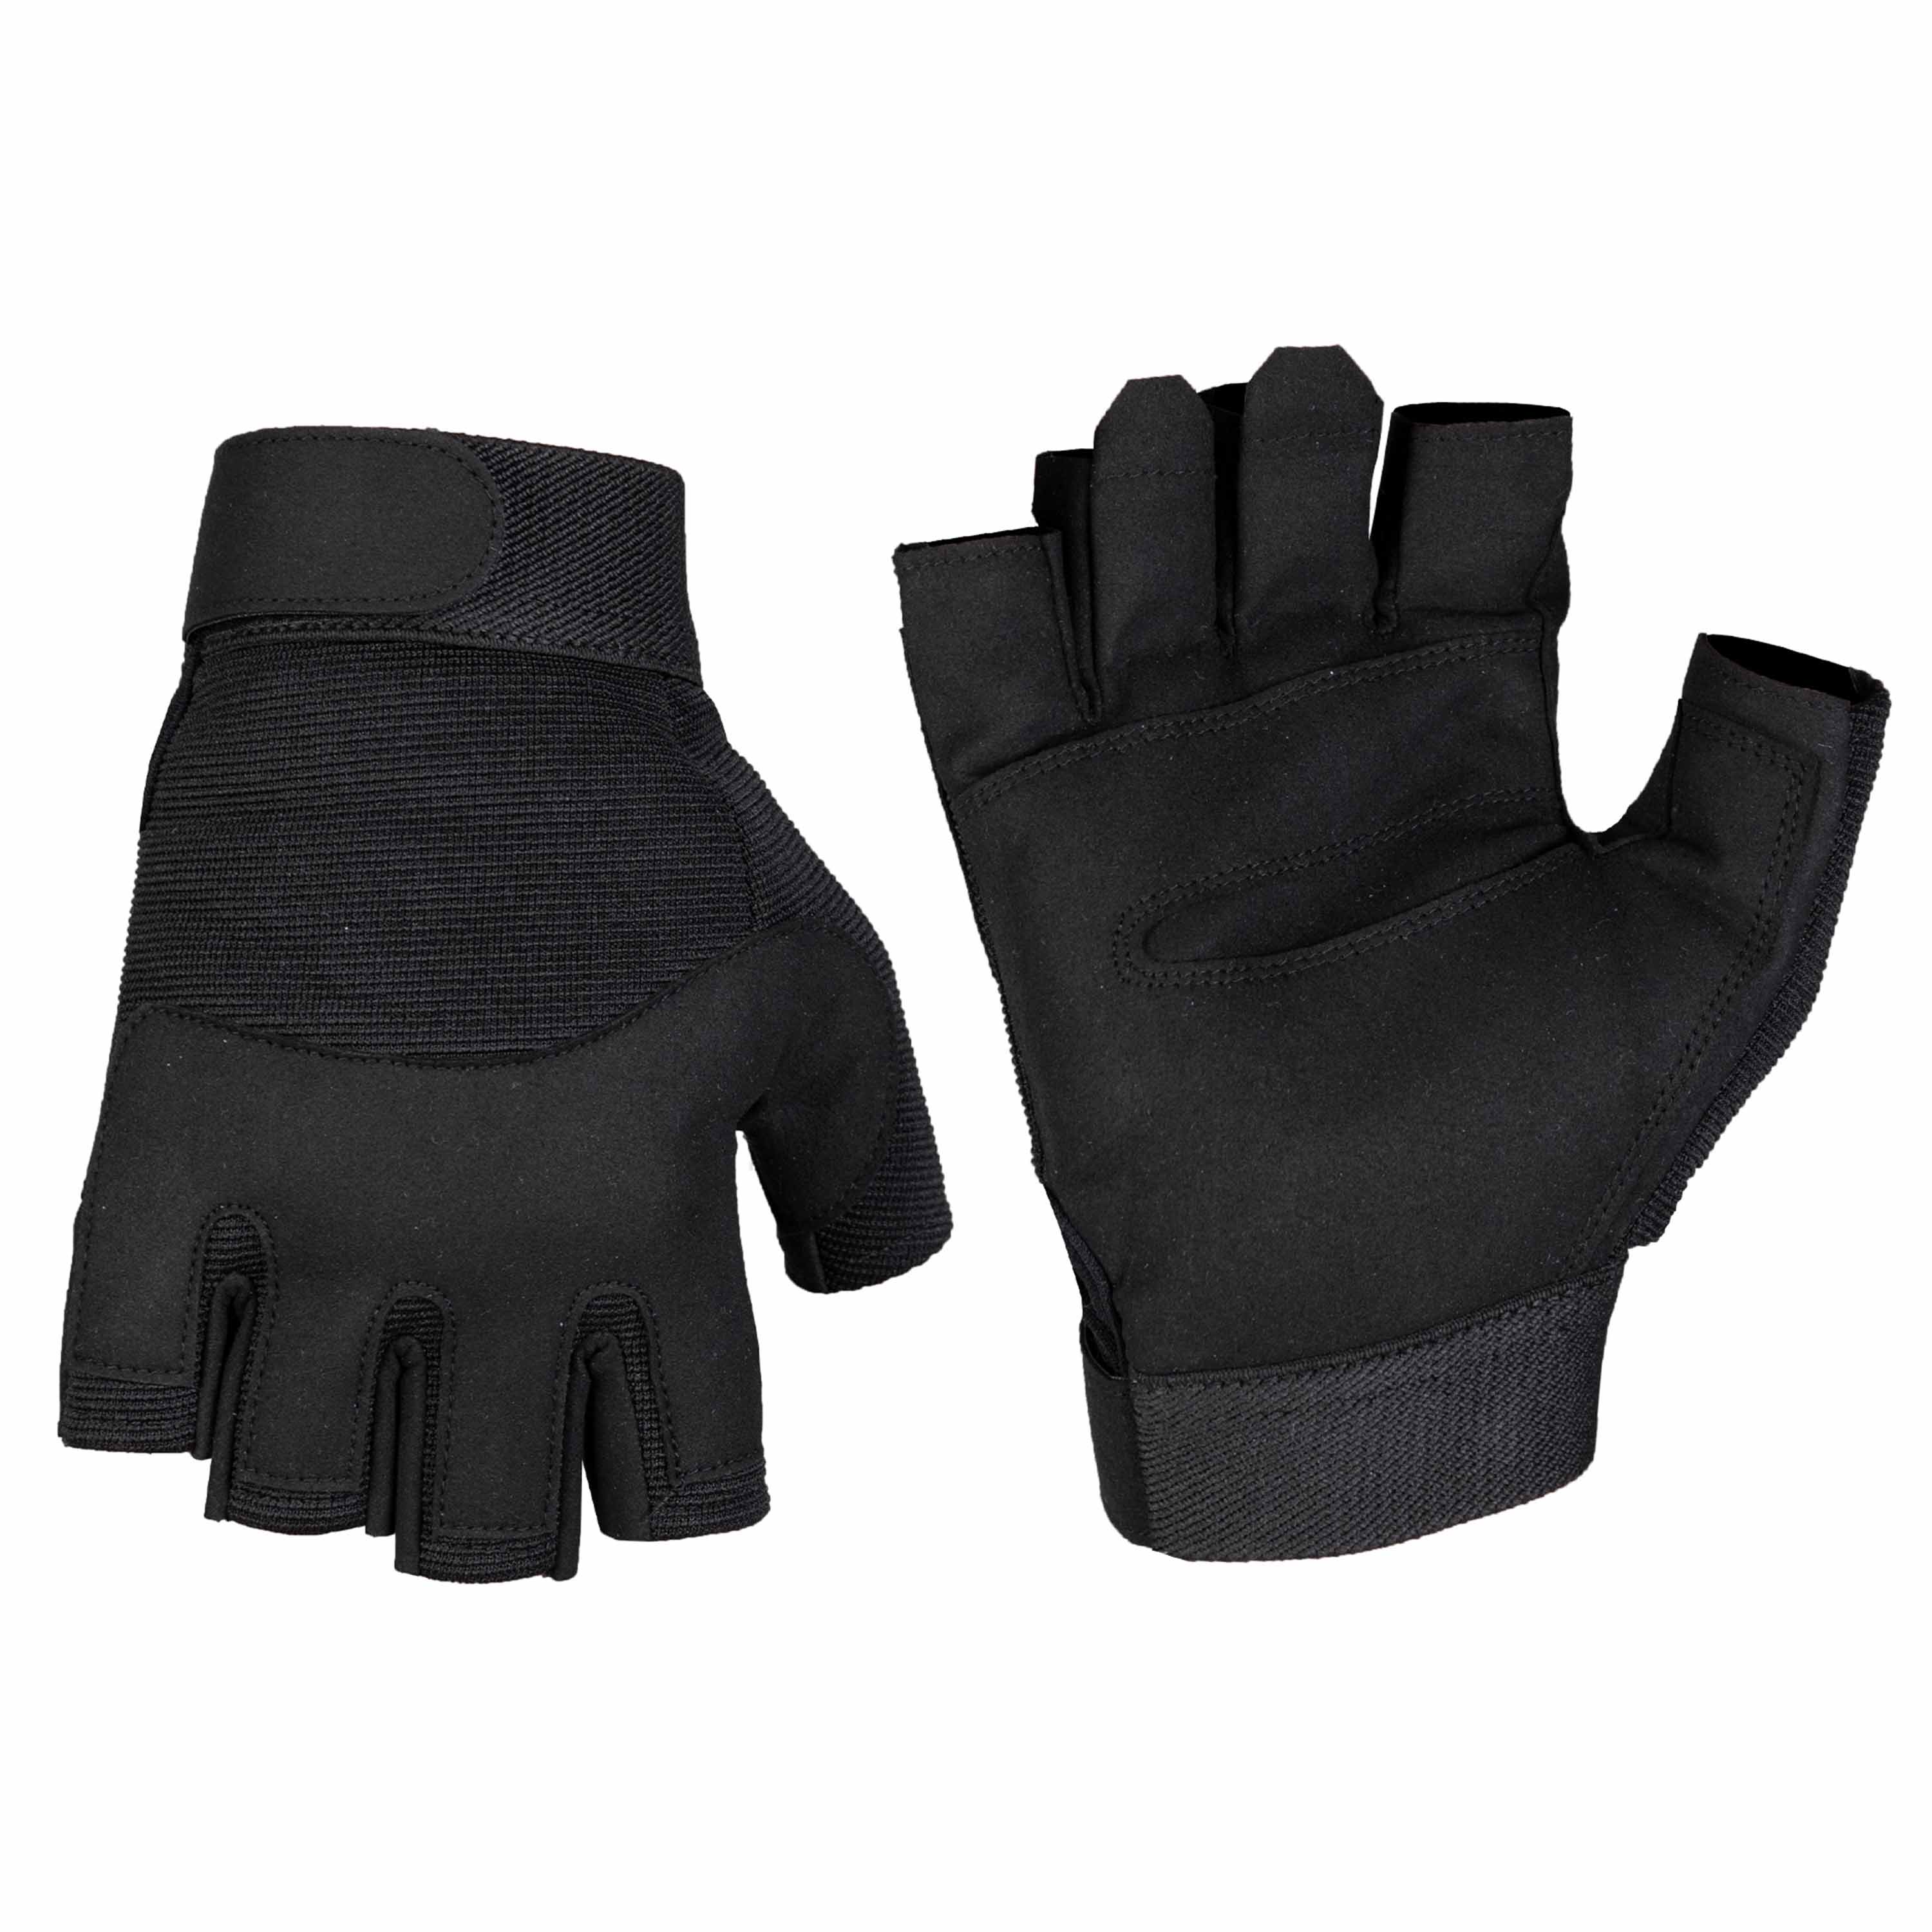 Mil-Tec Gloves Half Finger Army black | Mil-Tec Gloves Half Finger Army ...